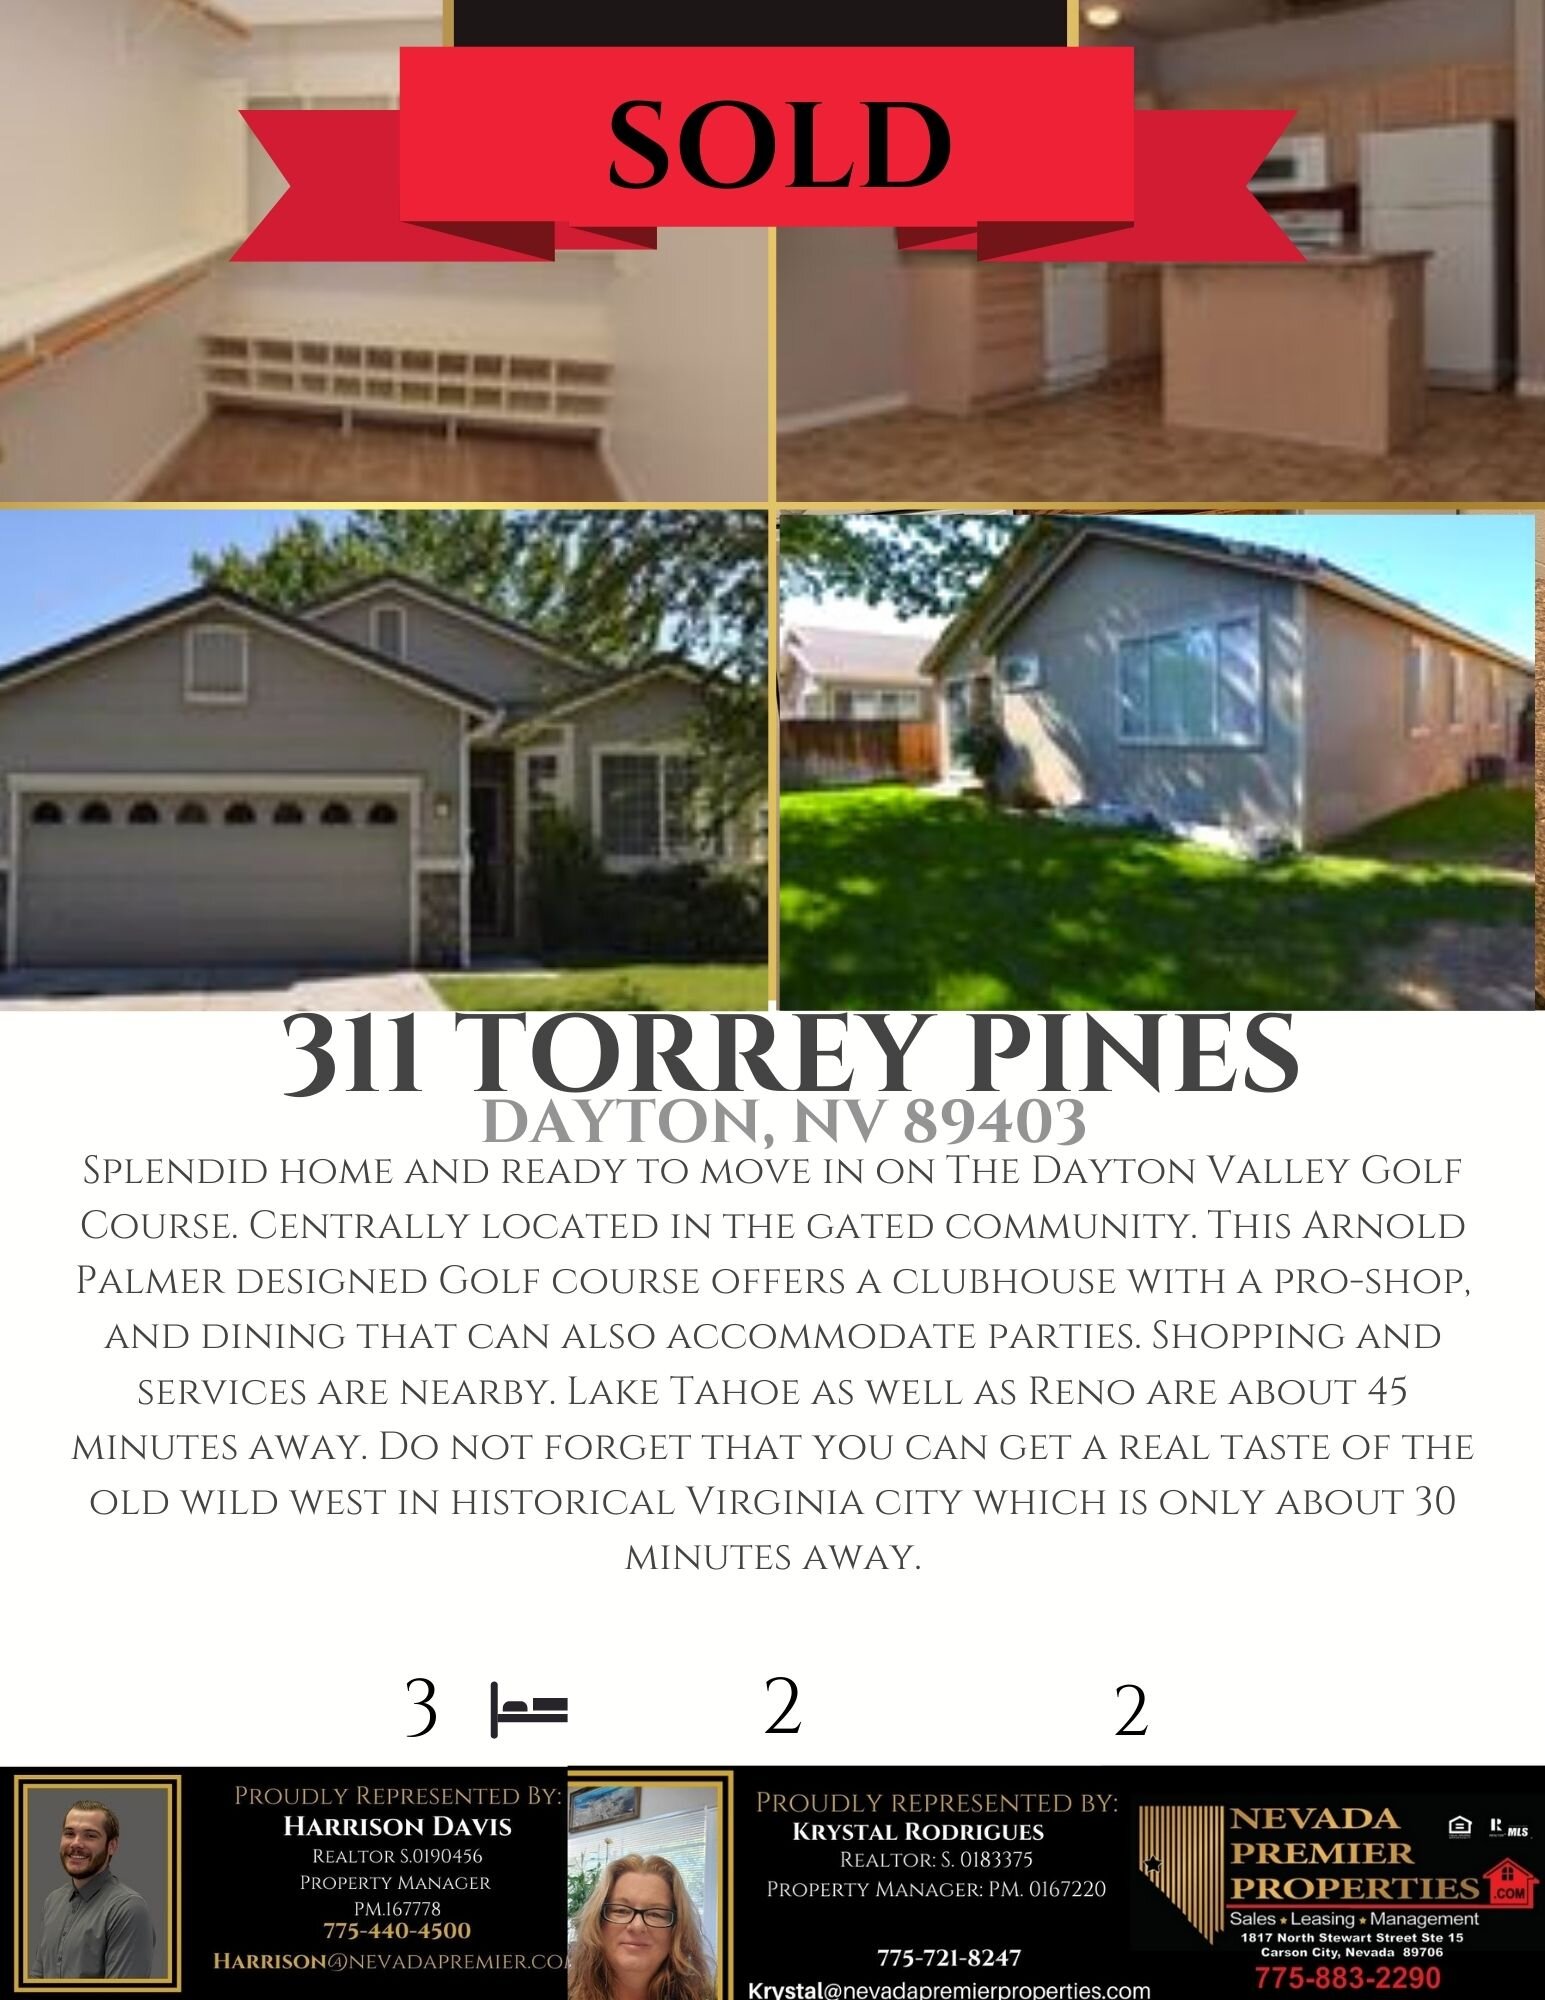 311 Torrey Pines sold.jpg